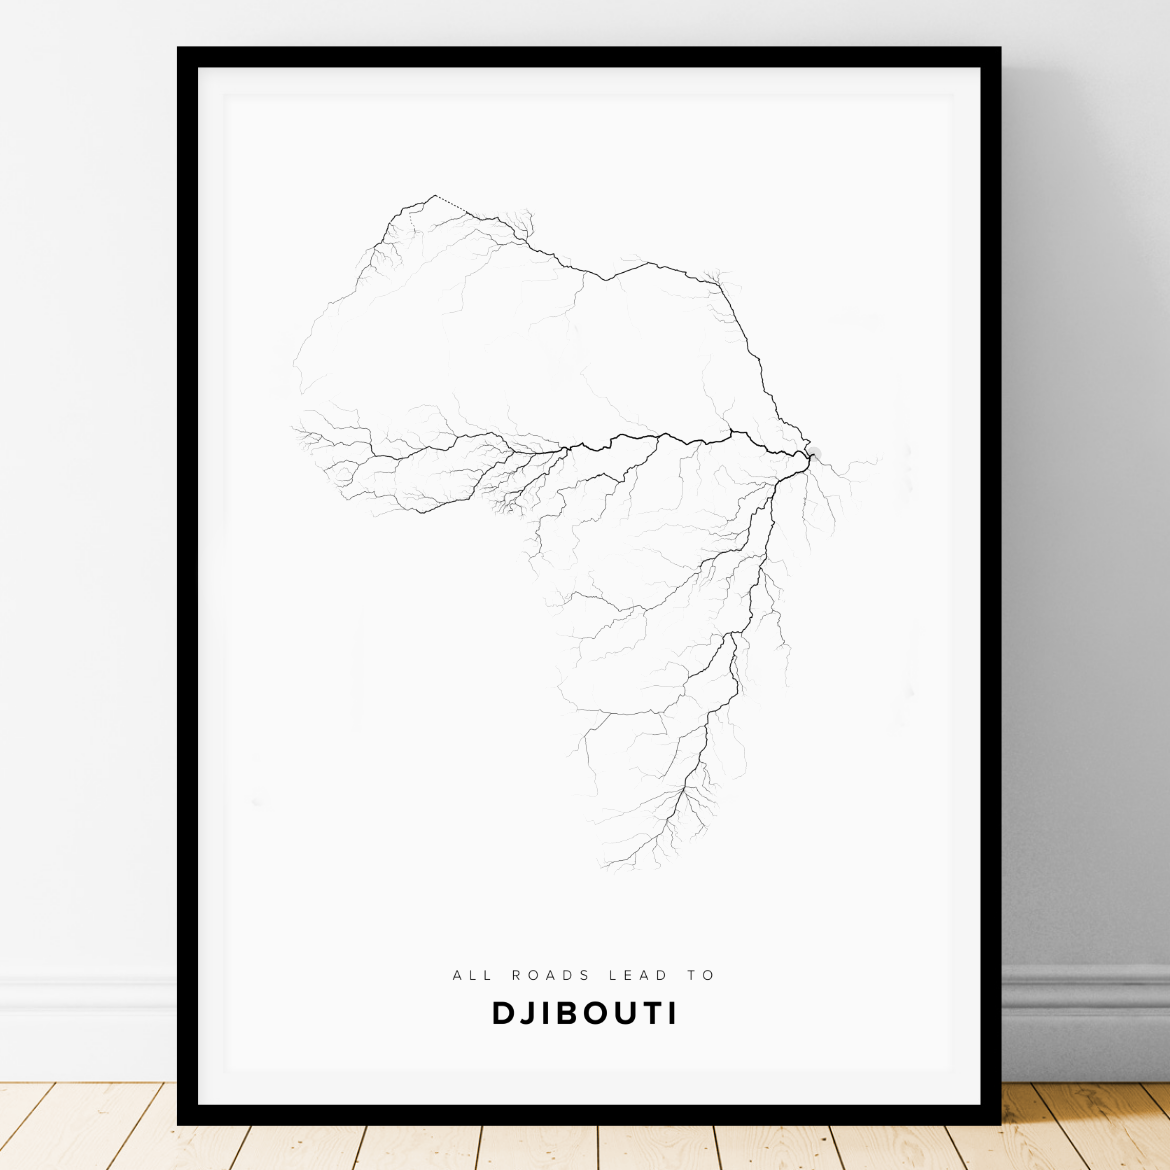 All roads lead to Djibouti (Djibouti) Fine Art Map Print